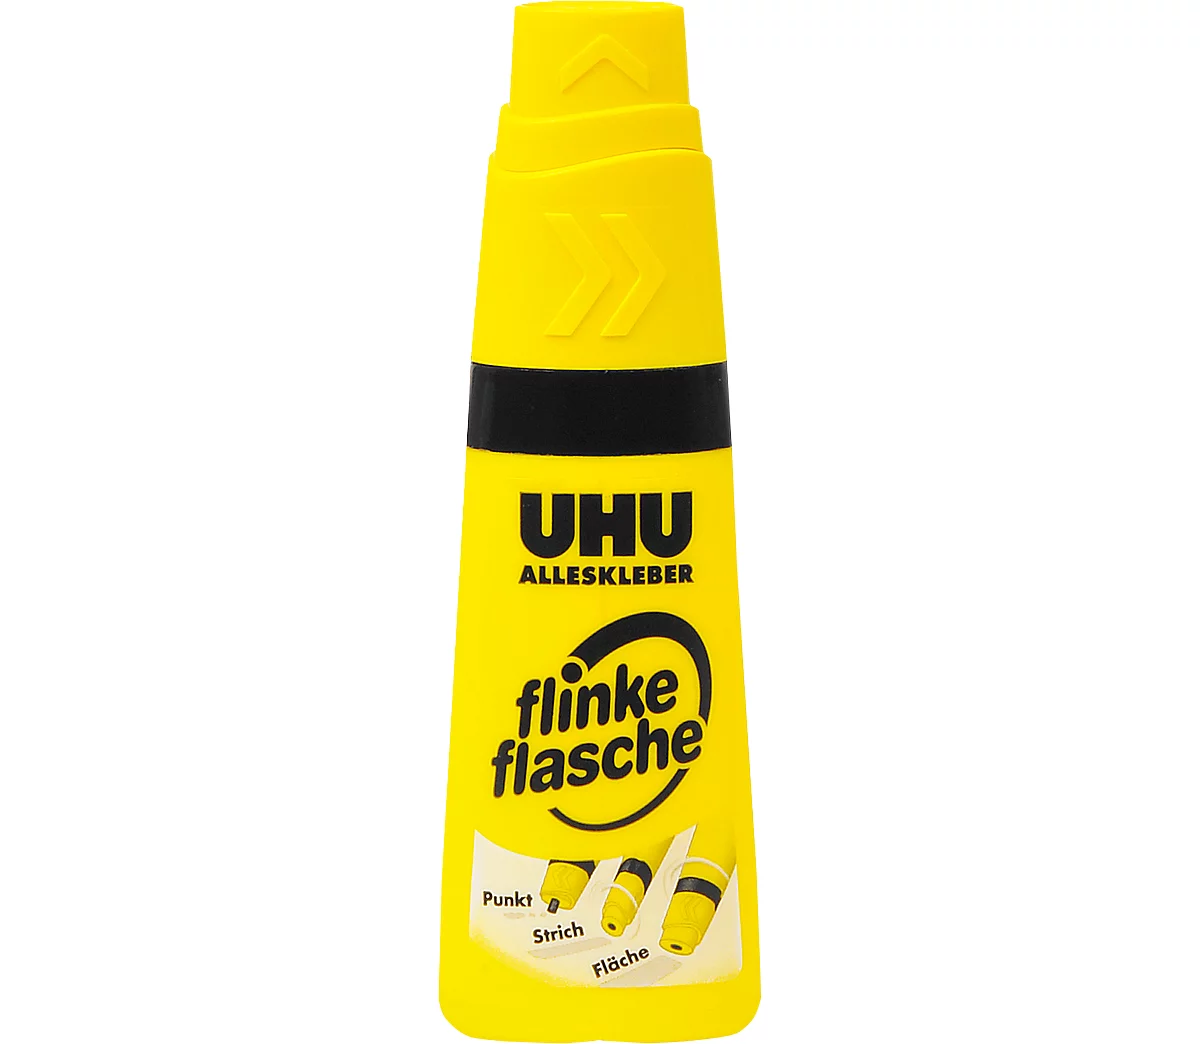 Alleskleber UHU "flinke flasche", 35 g